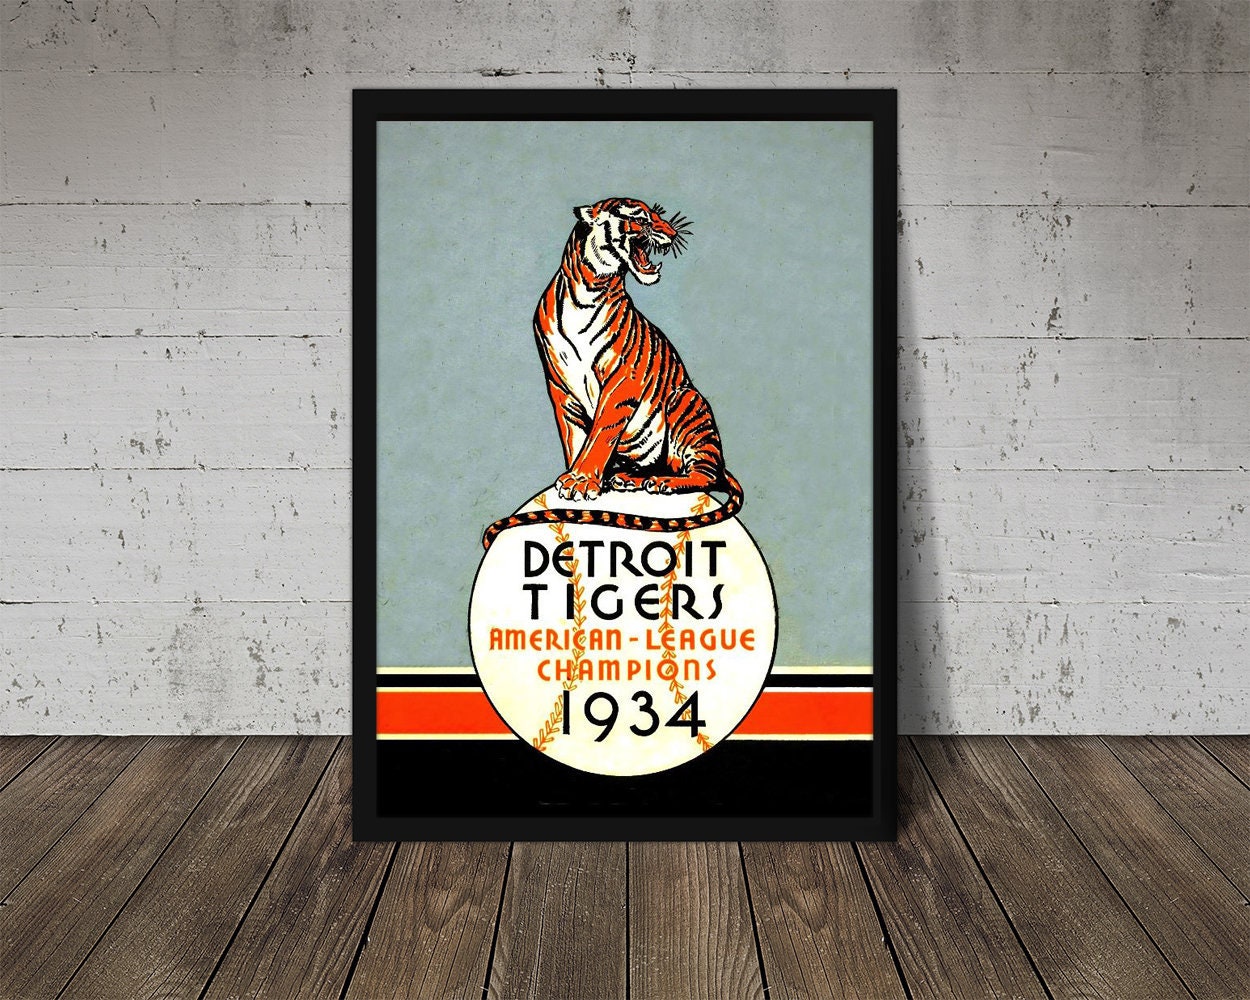 Detroit Tigers All-Time Greats (13 Legends) Premium Poster Print